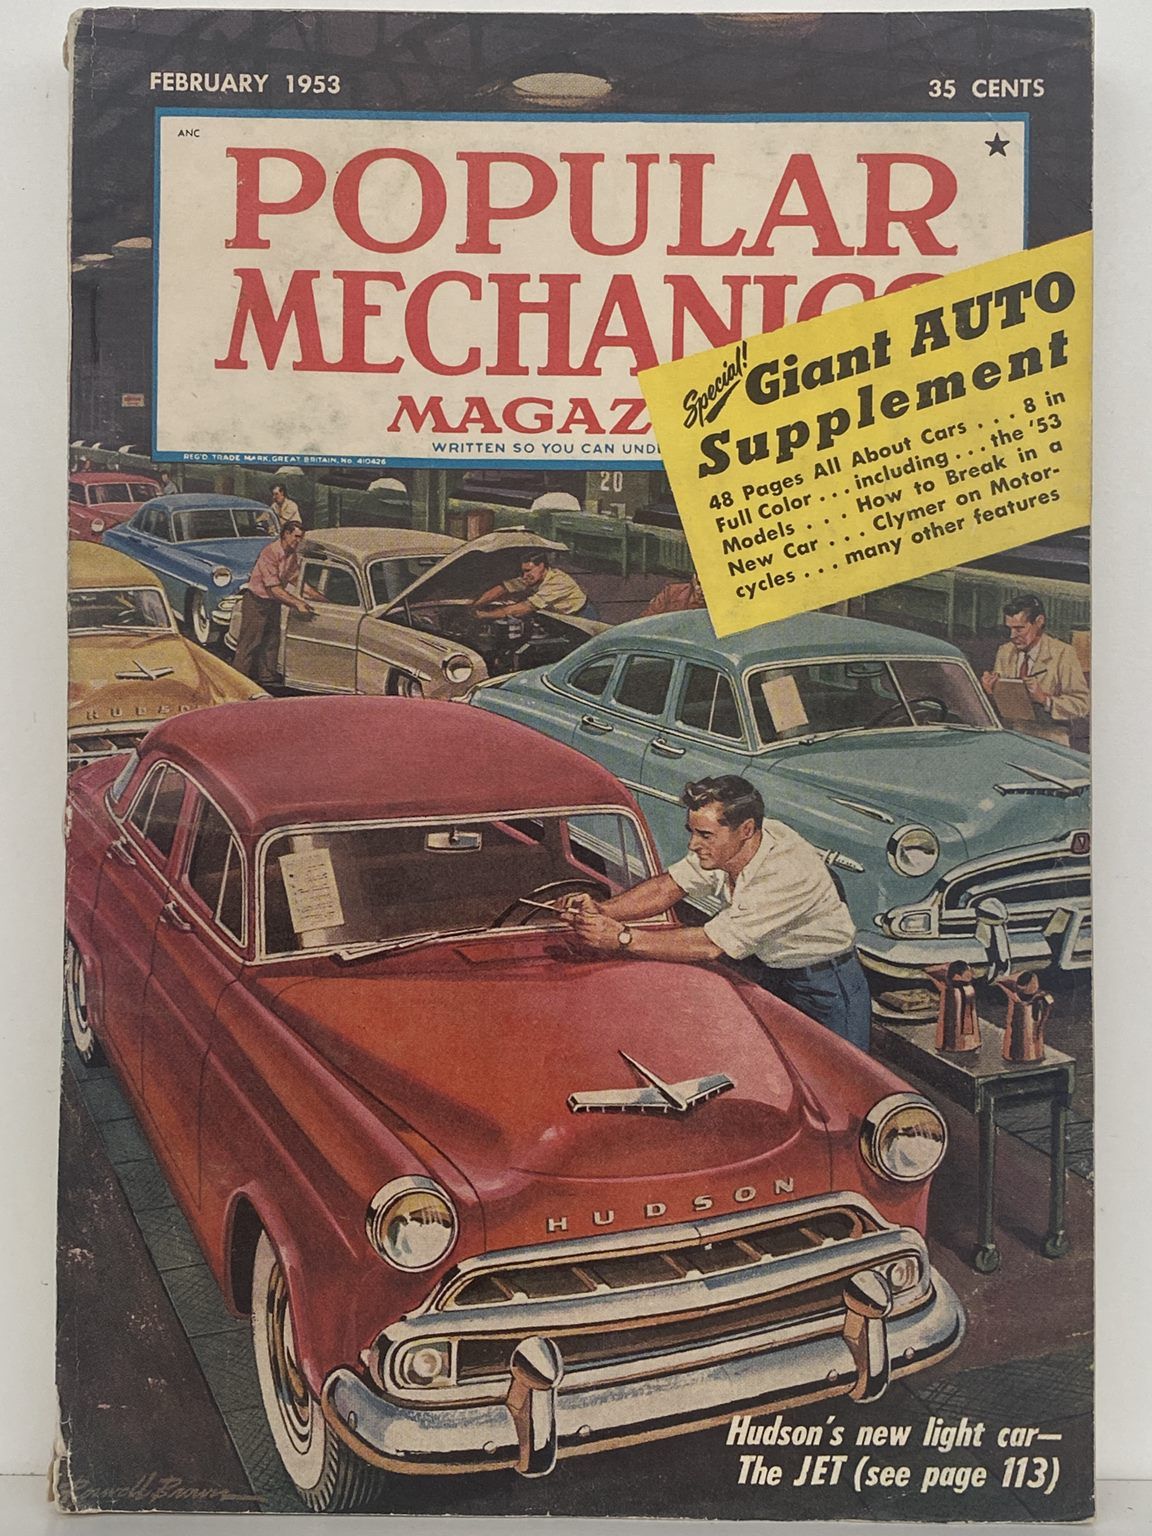 VINTAGE MAGAZINE: Popular Mechanics - Vol. 99, No. 2 - February 1953